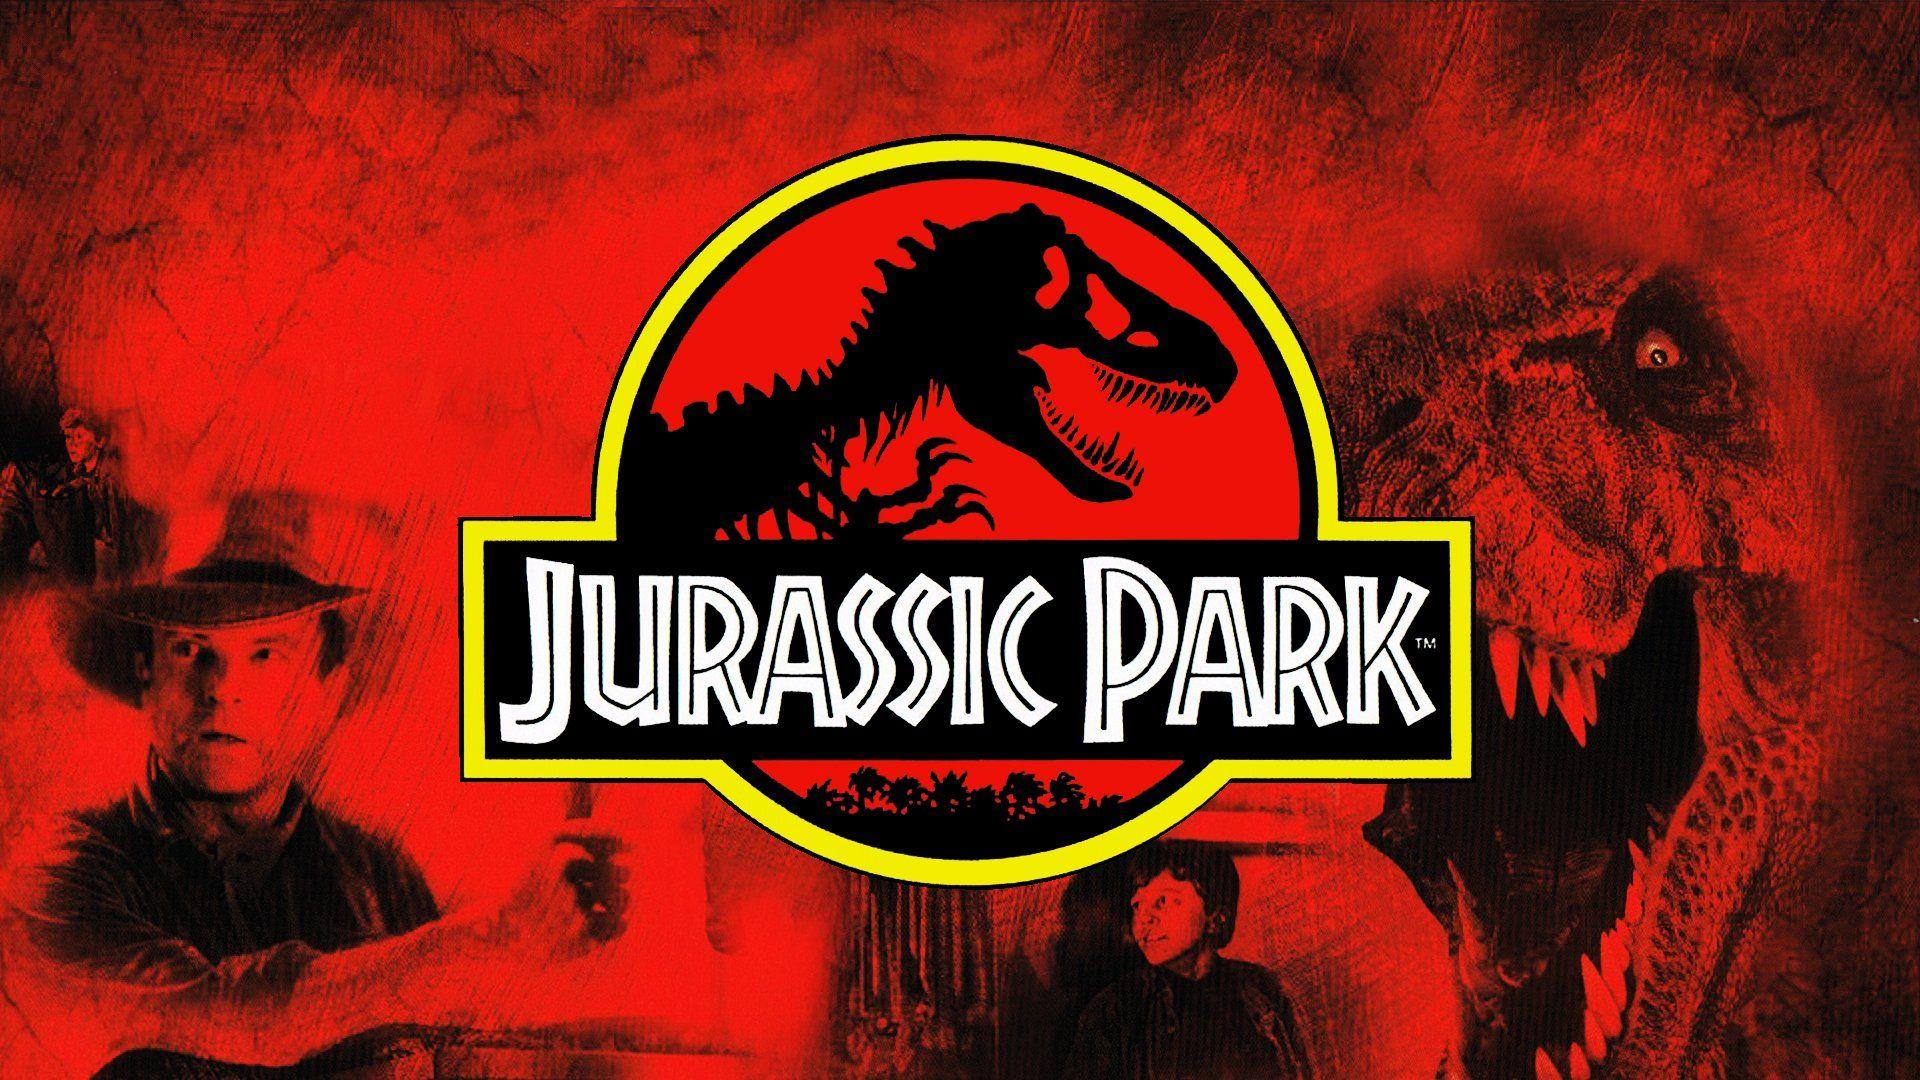 Jurassic Park Desktop Wallpapers - Top Free Jurassic Park Desktop